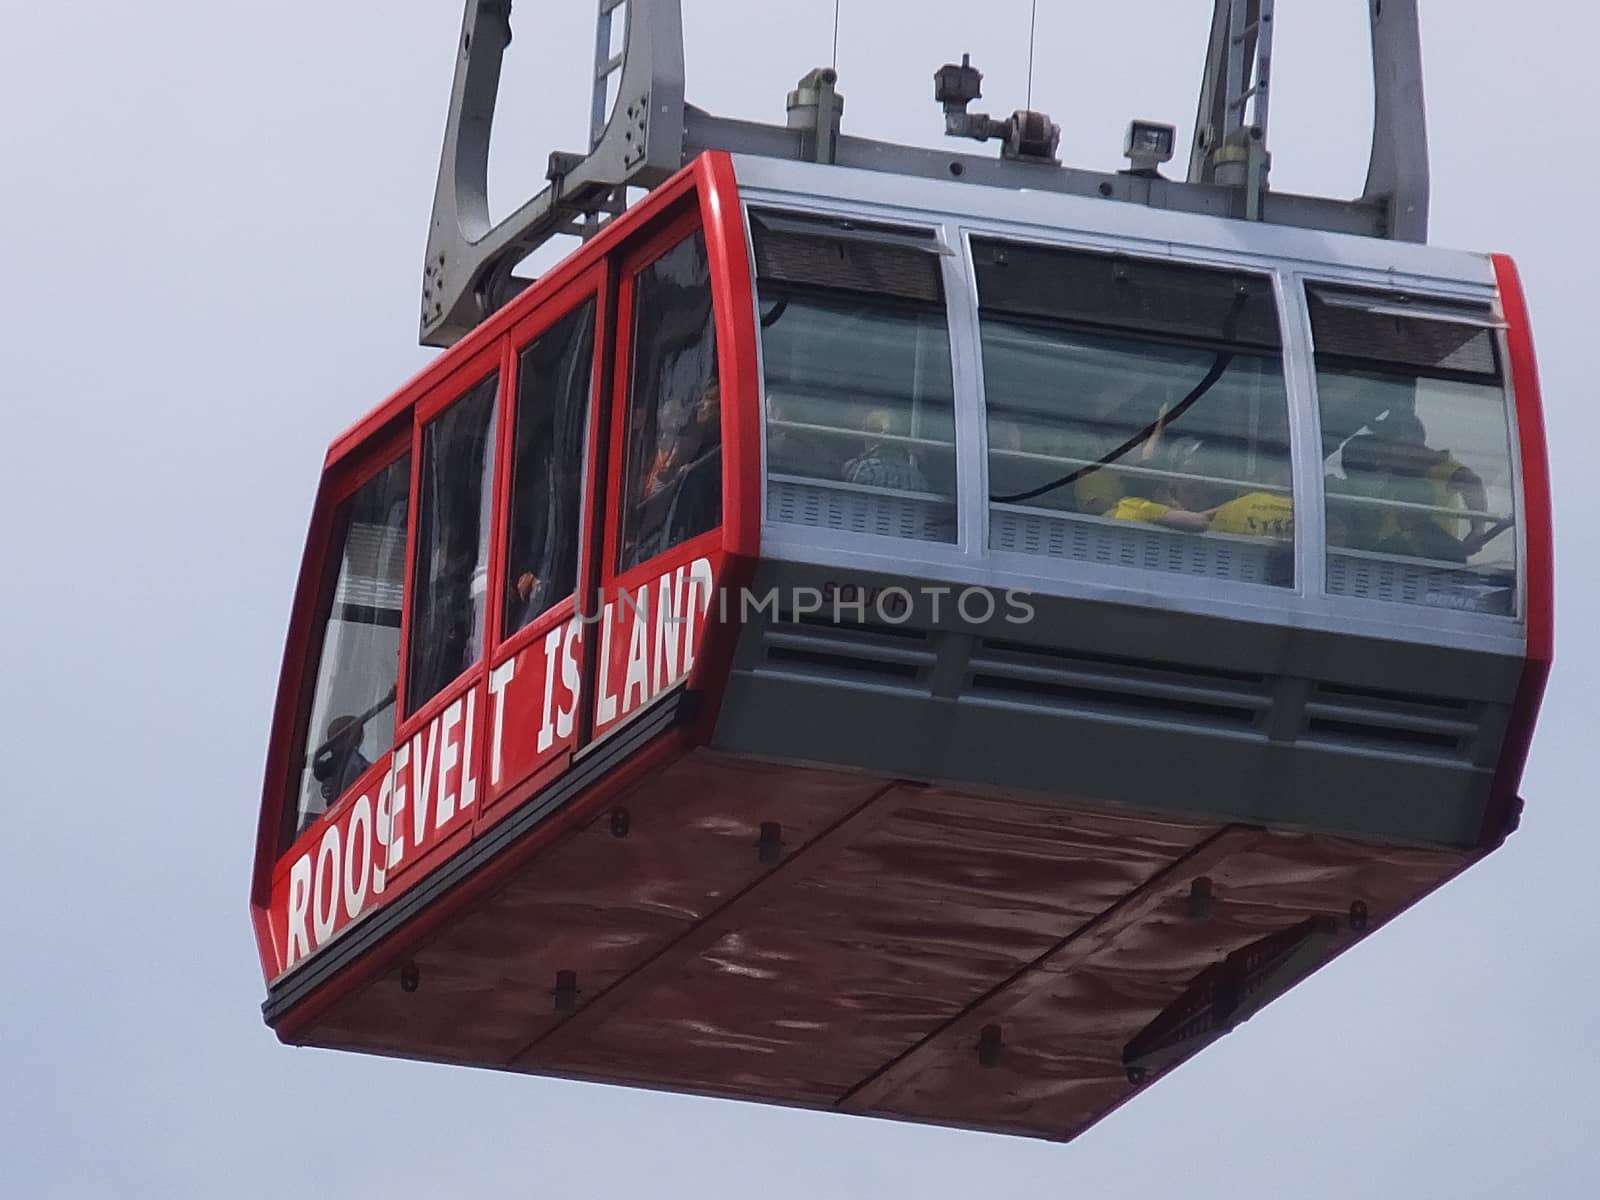 Roosevelt Island cable tram car in New York by sainaniritu